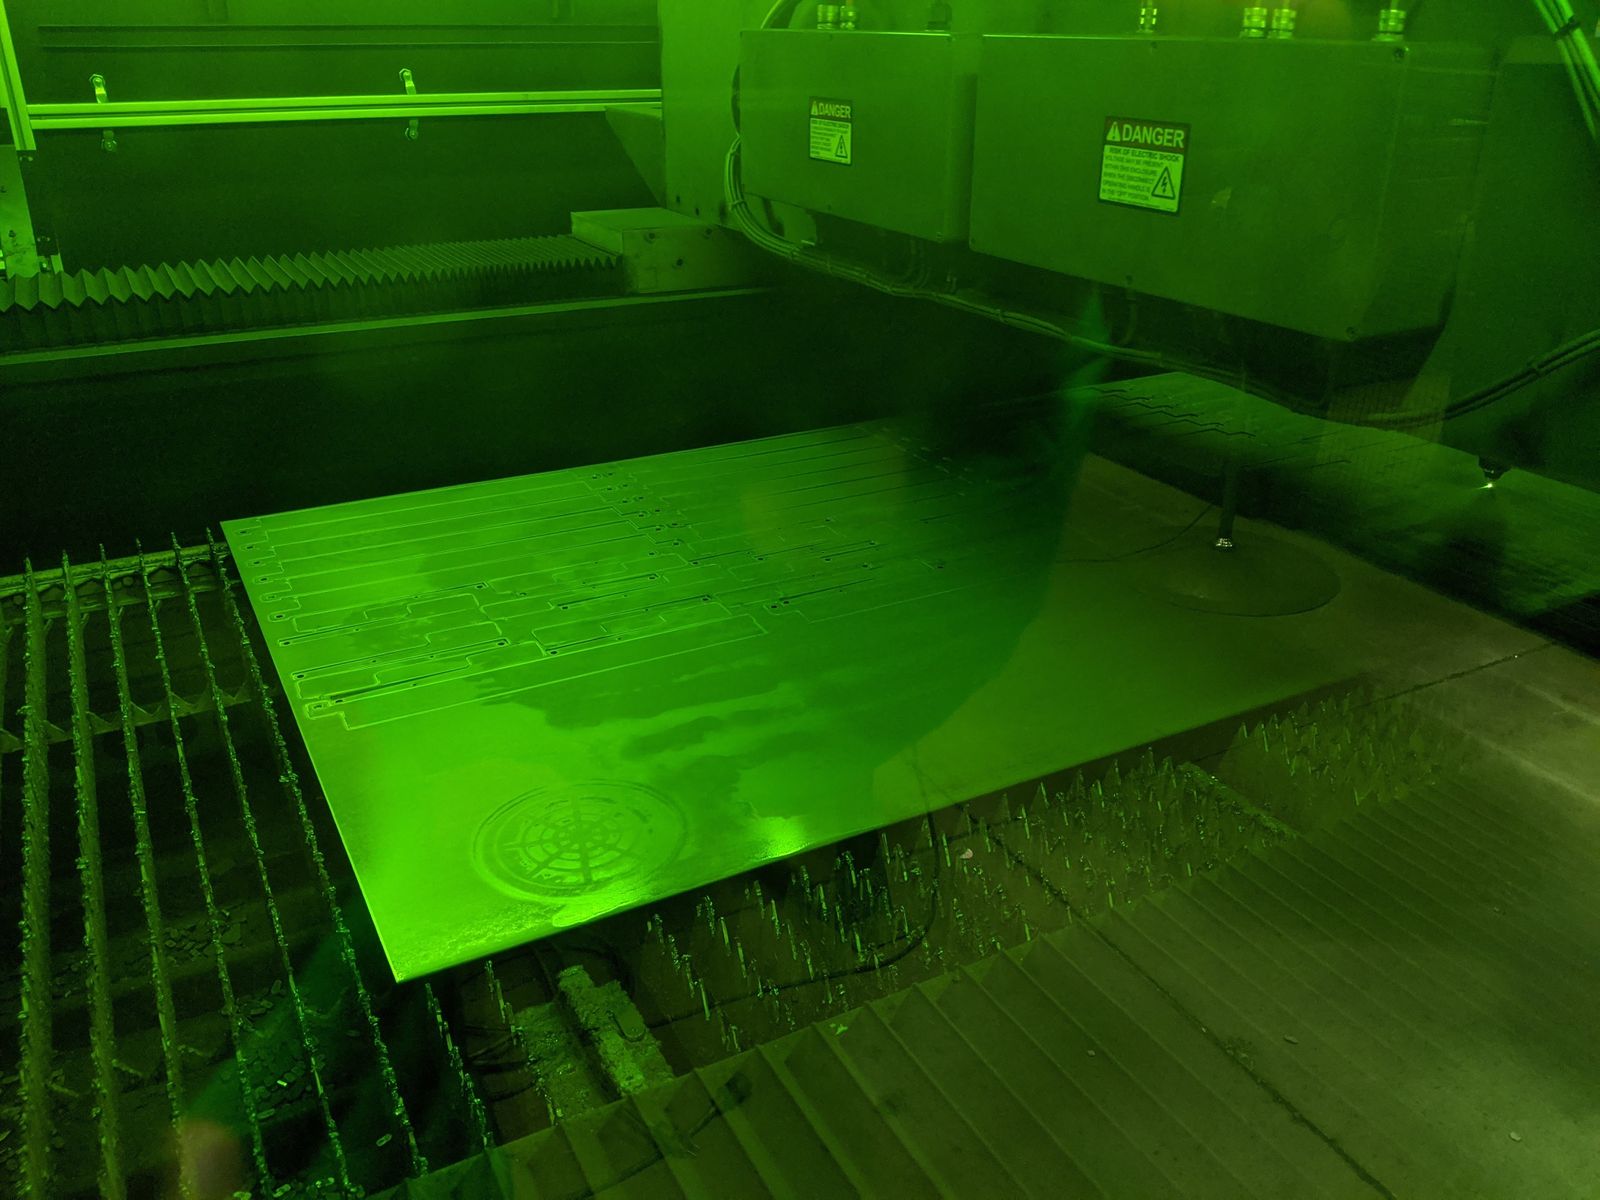 Metal fabrication under green light